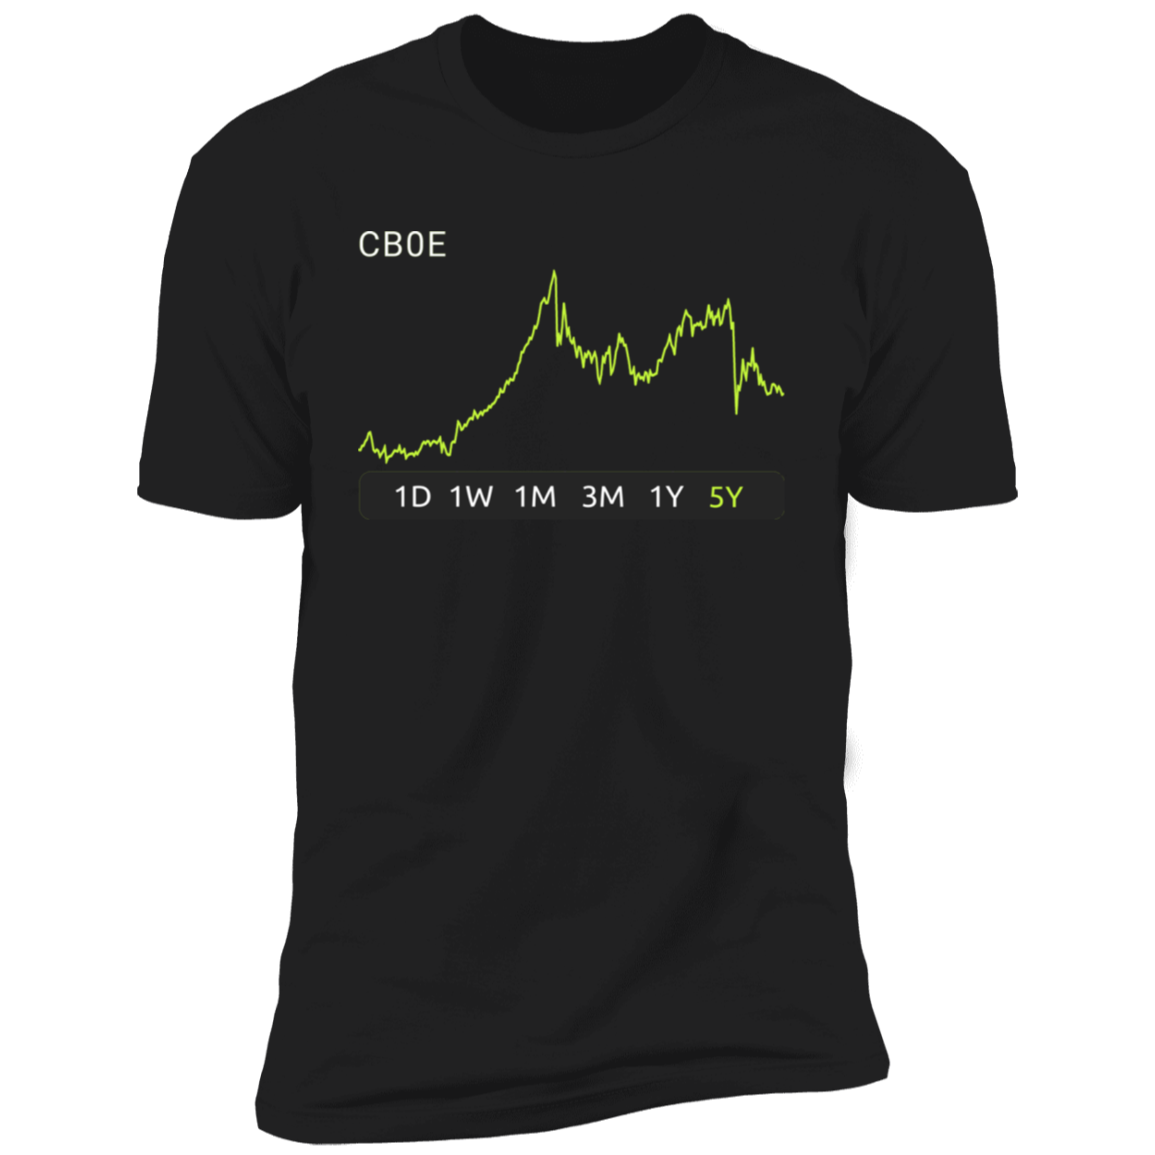 CB0E Stock 5y Premium T-Shirt